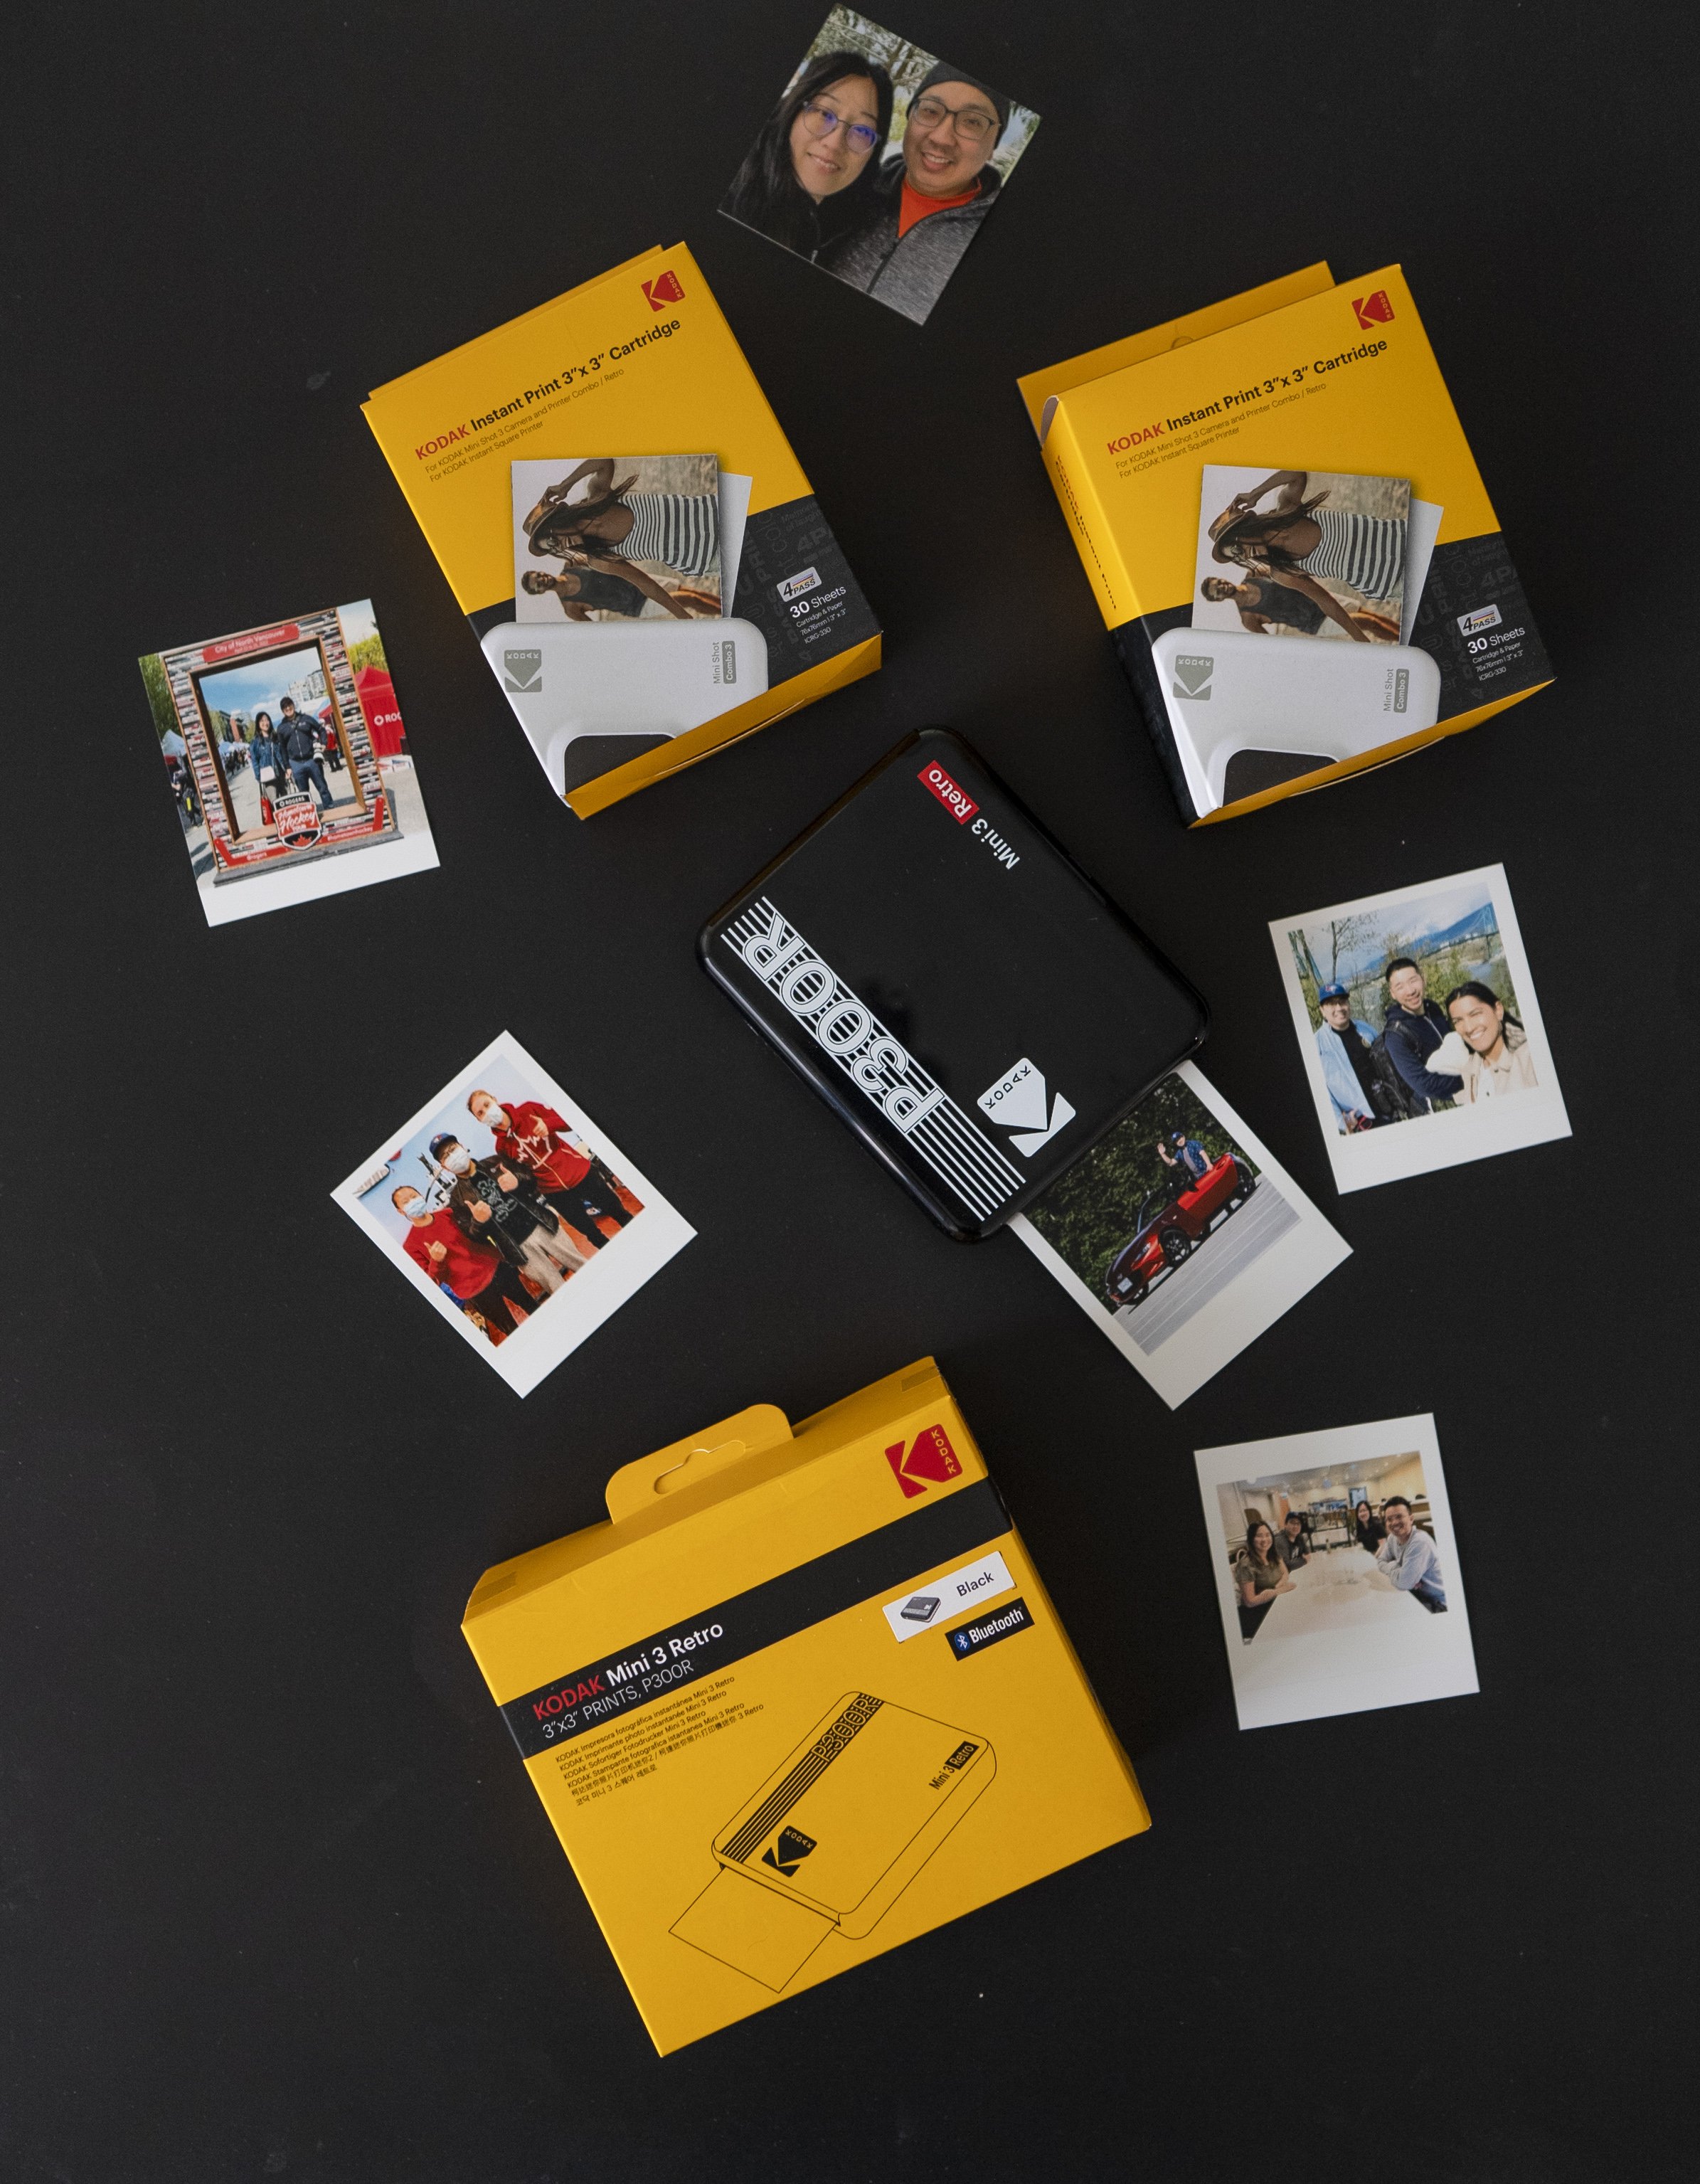 Kodak Mini 3 Retro 3×3” Portable Photo Printer review - Rachybop